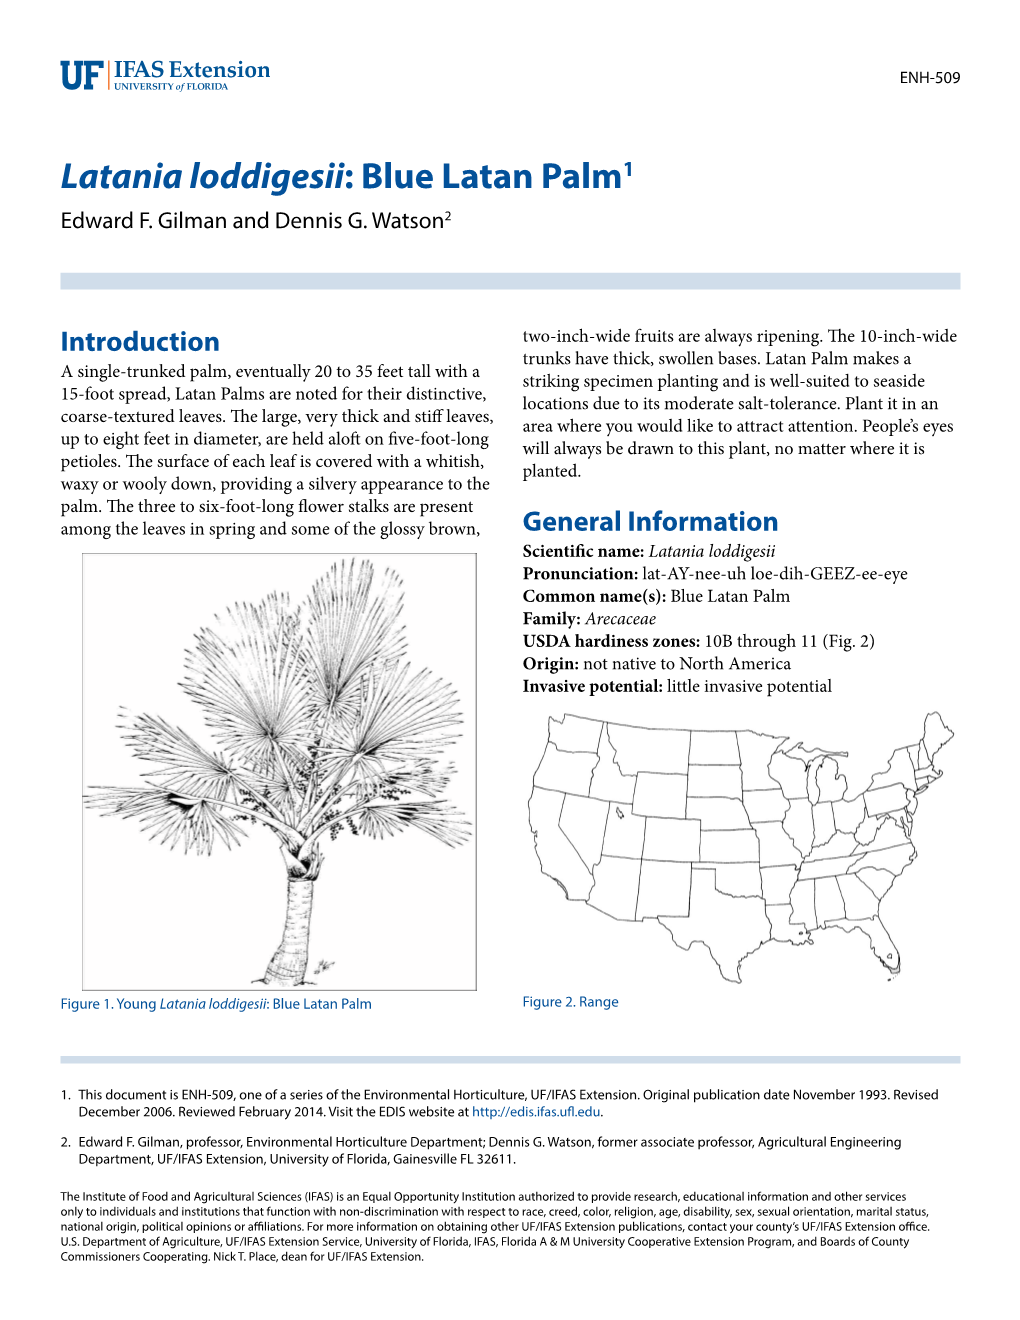 Latania Loddigesii: Blue Latan Palm1 Edward F